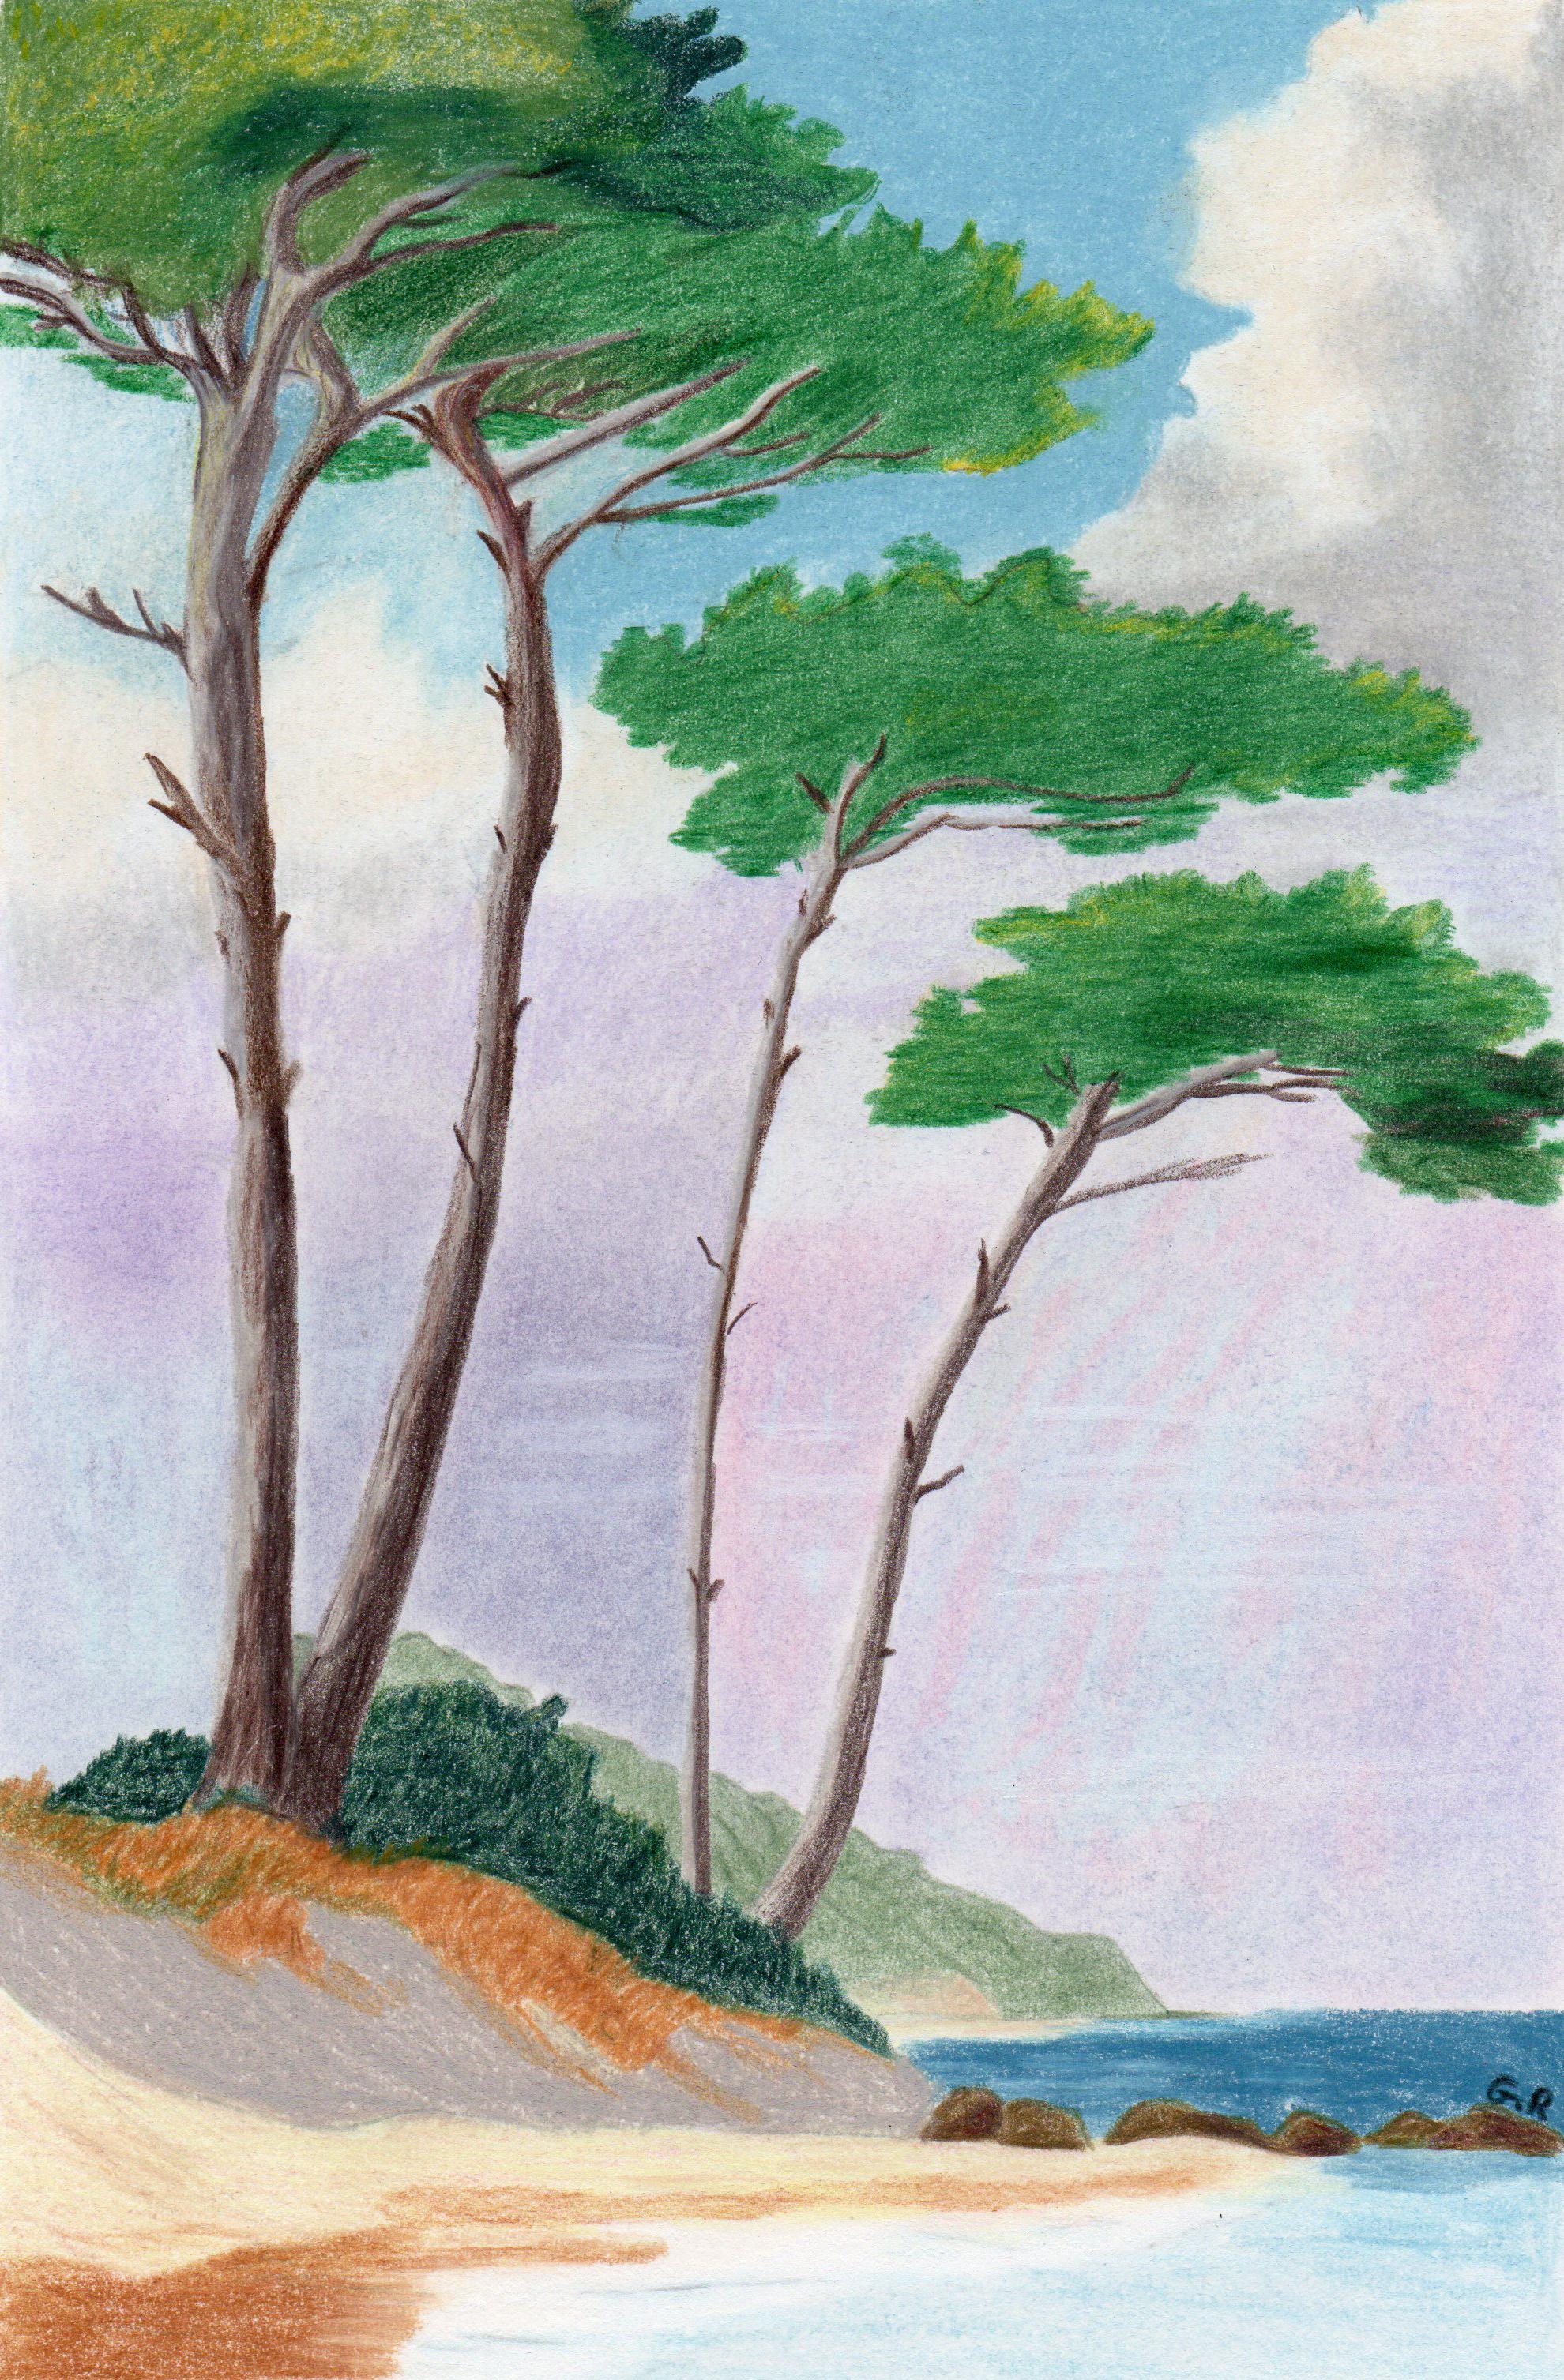 Au Bord de l'eau, Originalzeichnung, Pastell, Meereslandschaft, Bäume entlang der Küste